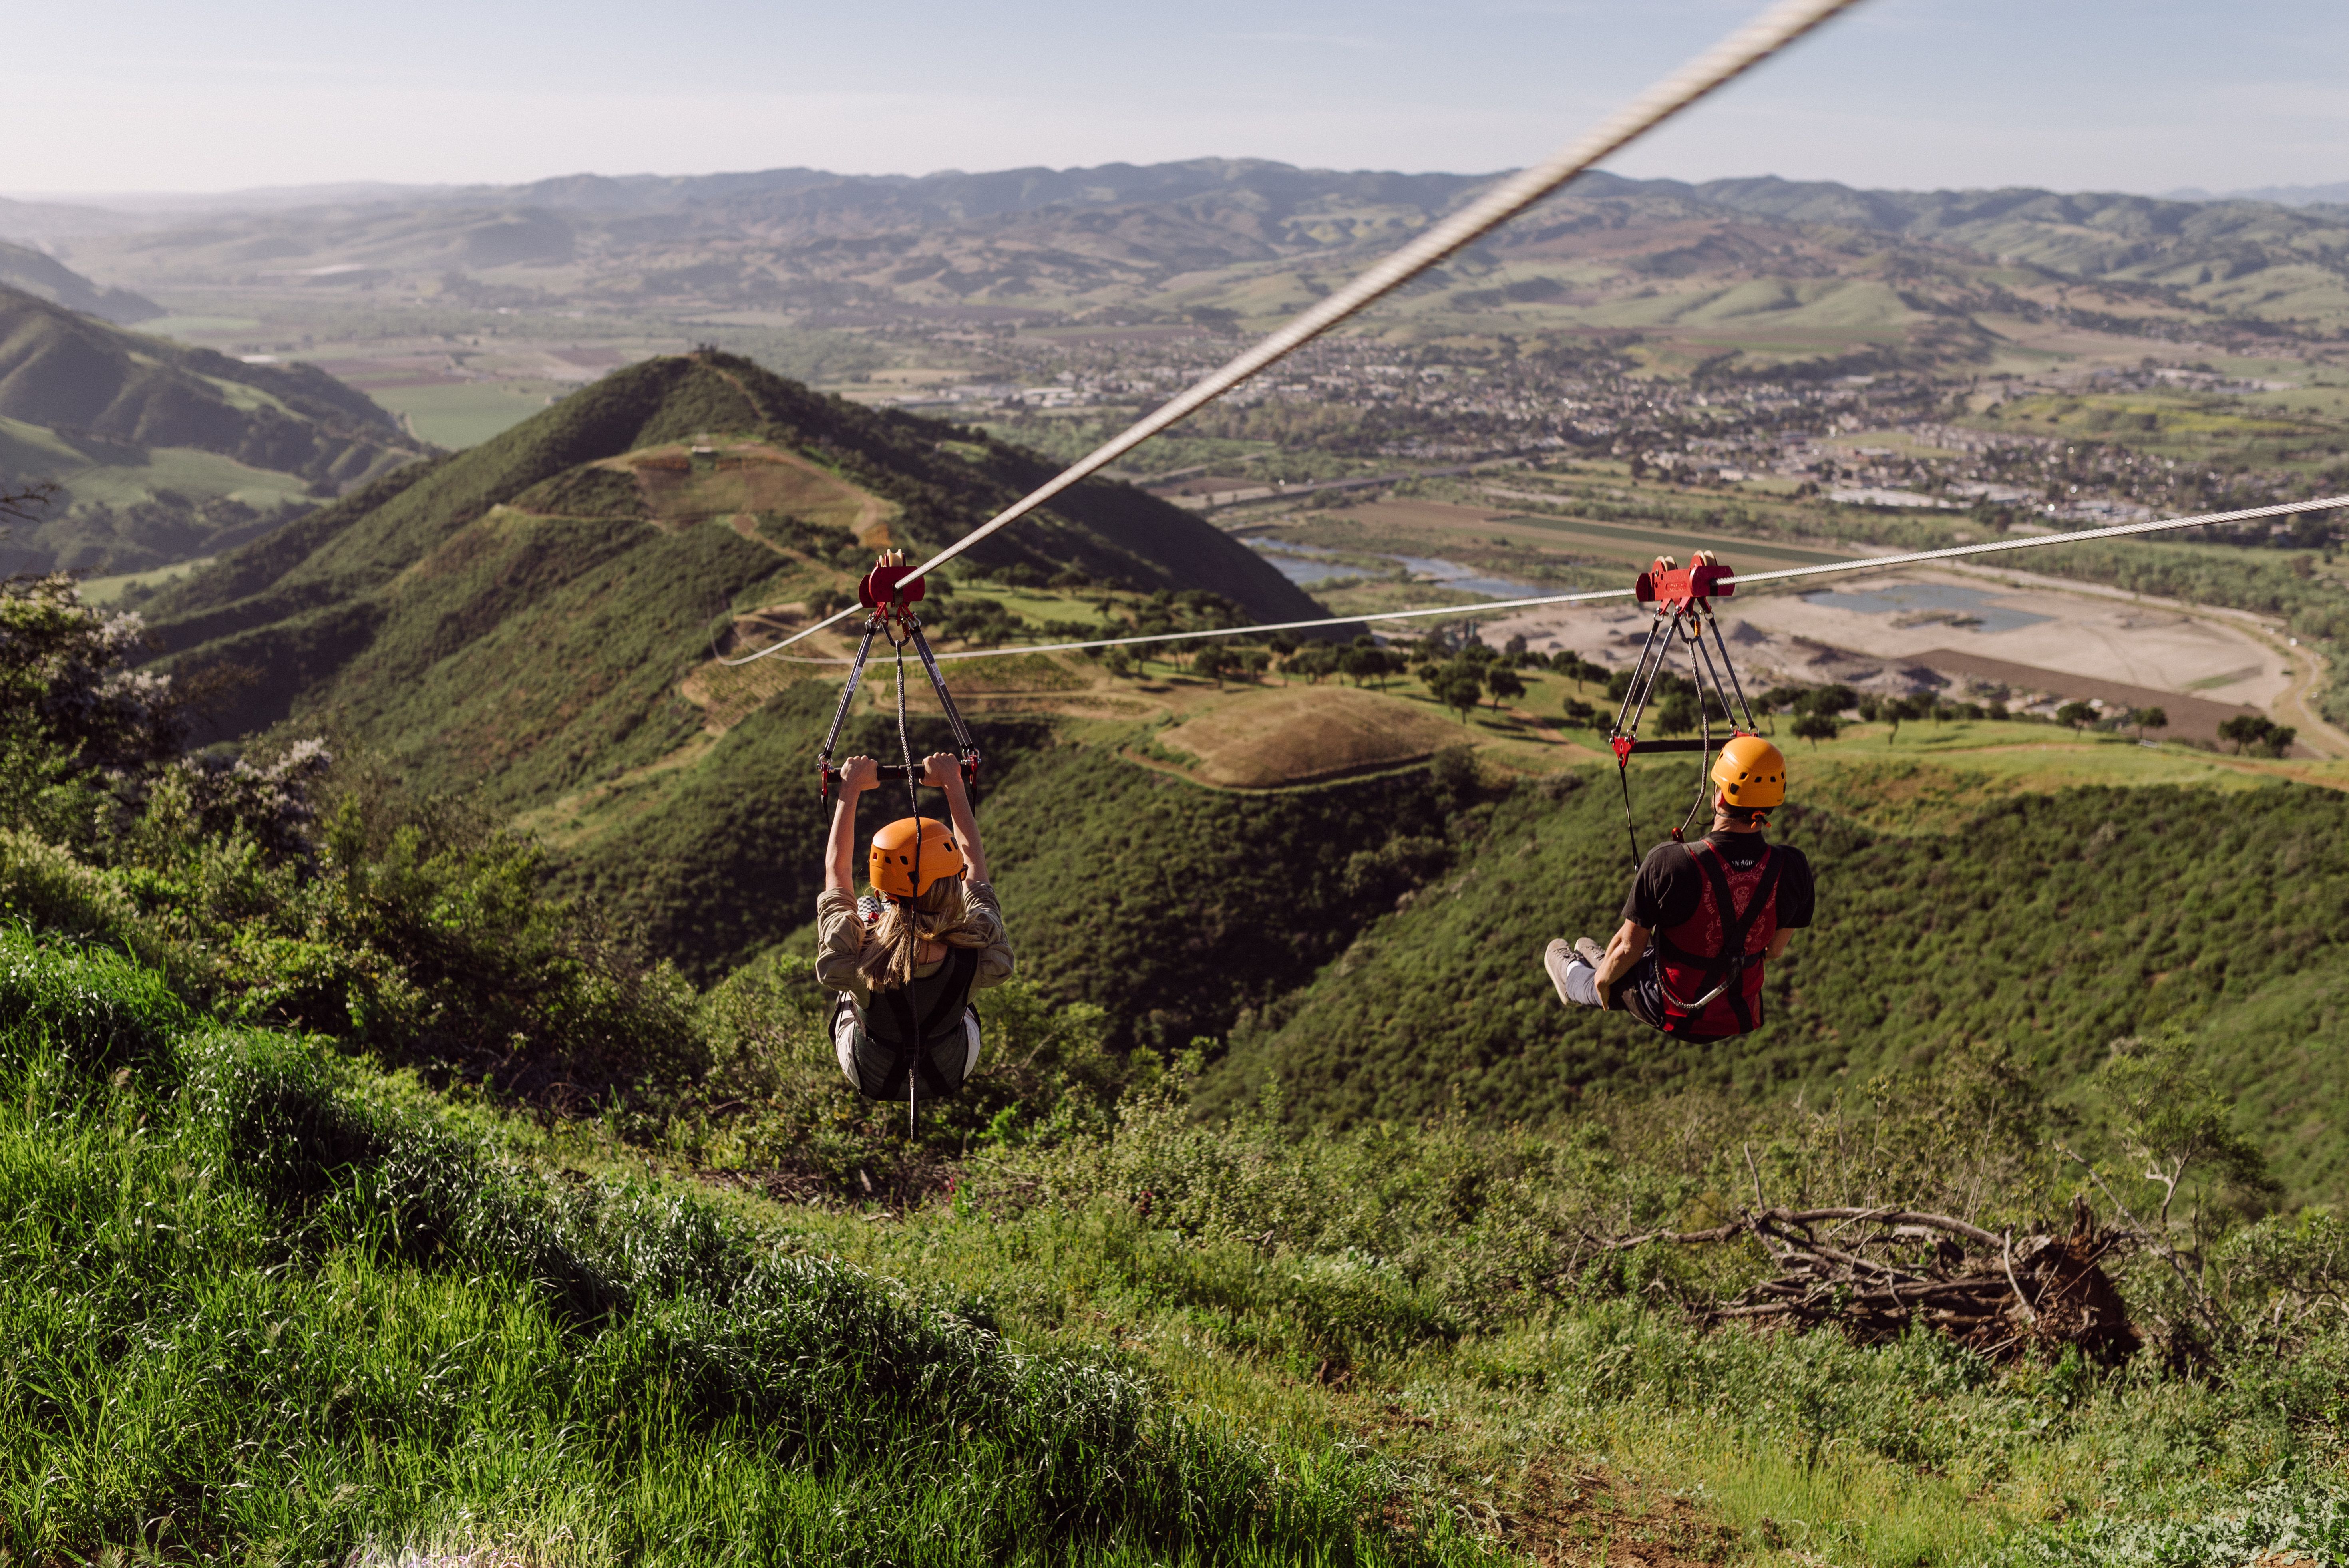 Orange-helmeted couple on ziplines above the Santa Ynez Valley